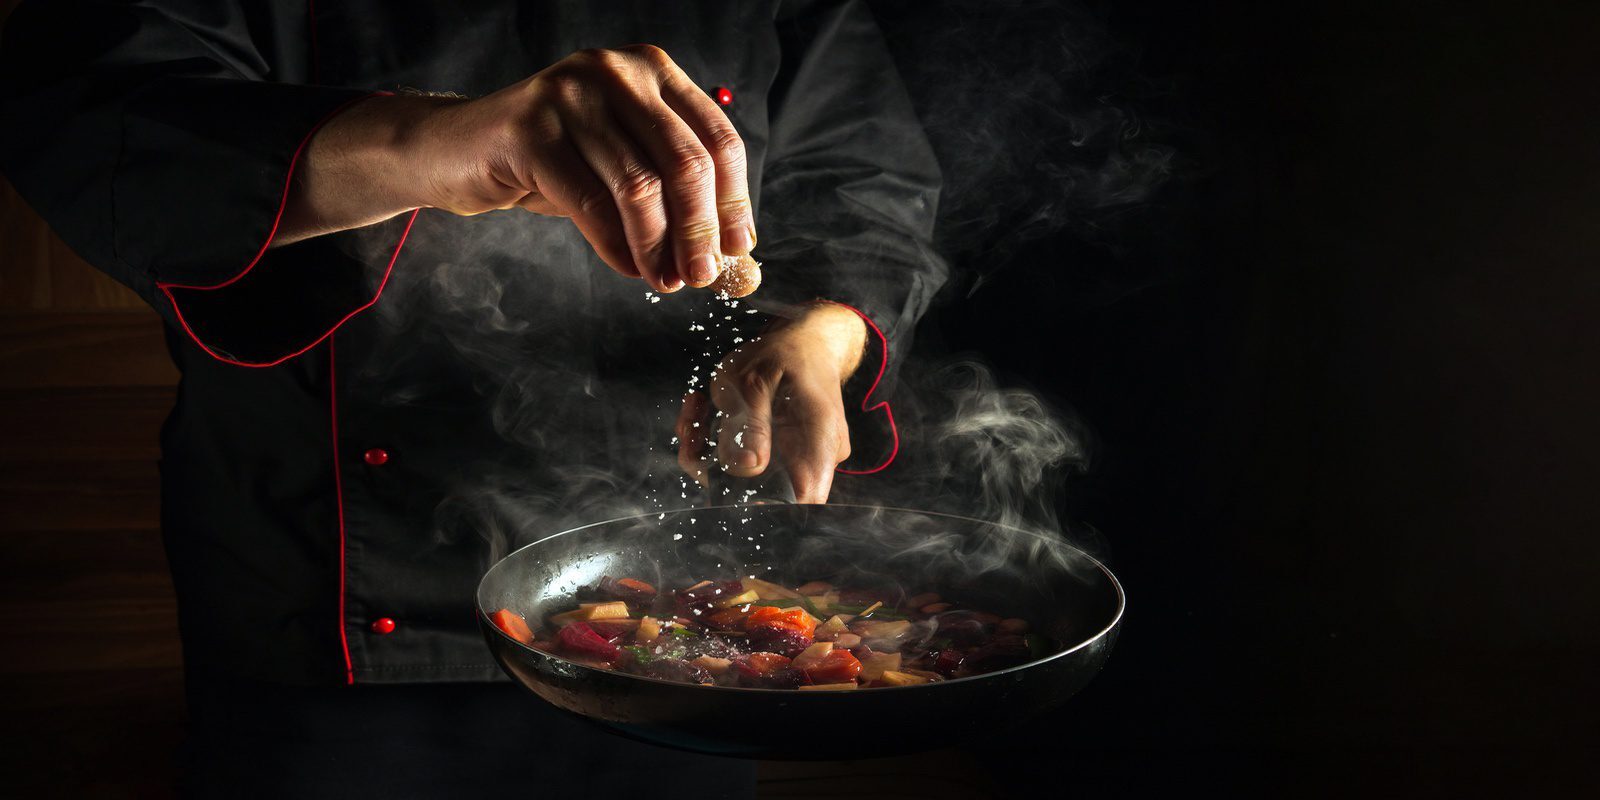 Chef seasoning vegetables being cooked